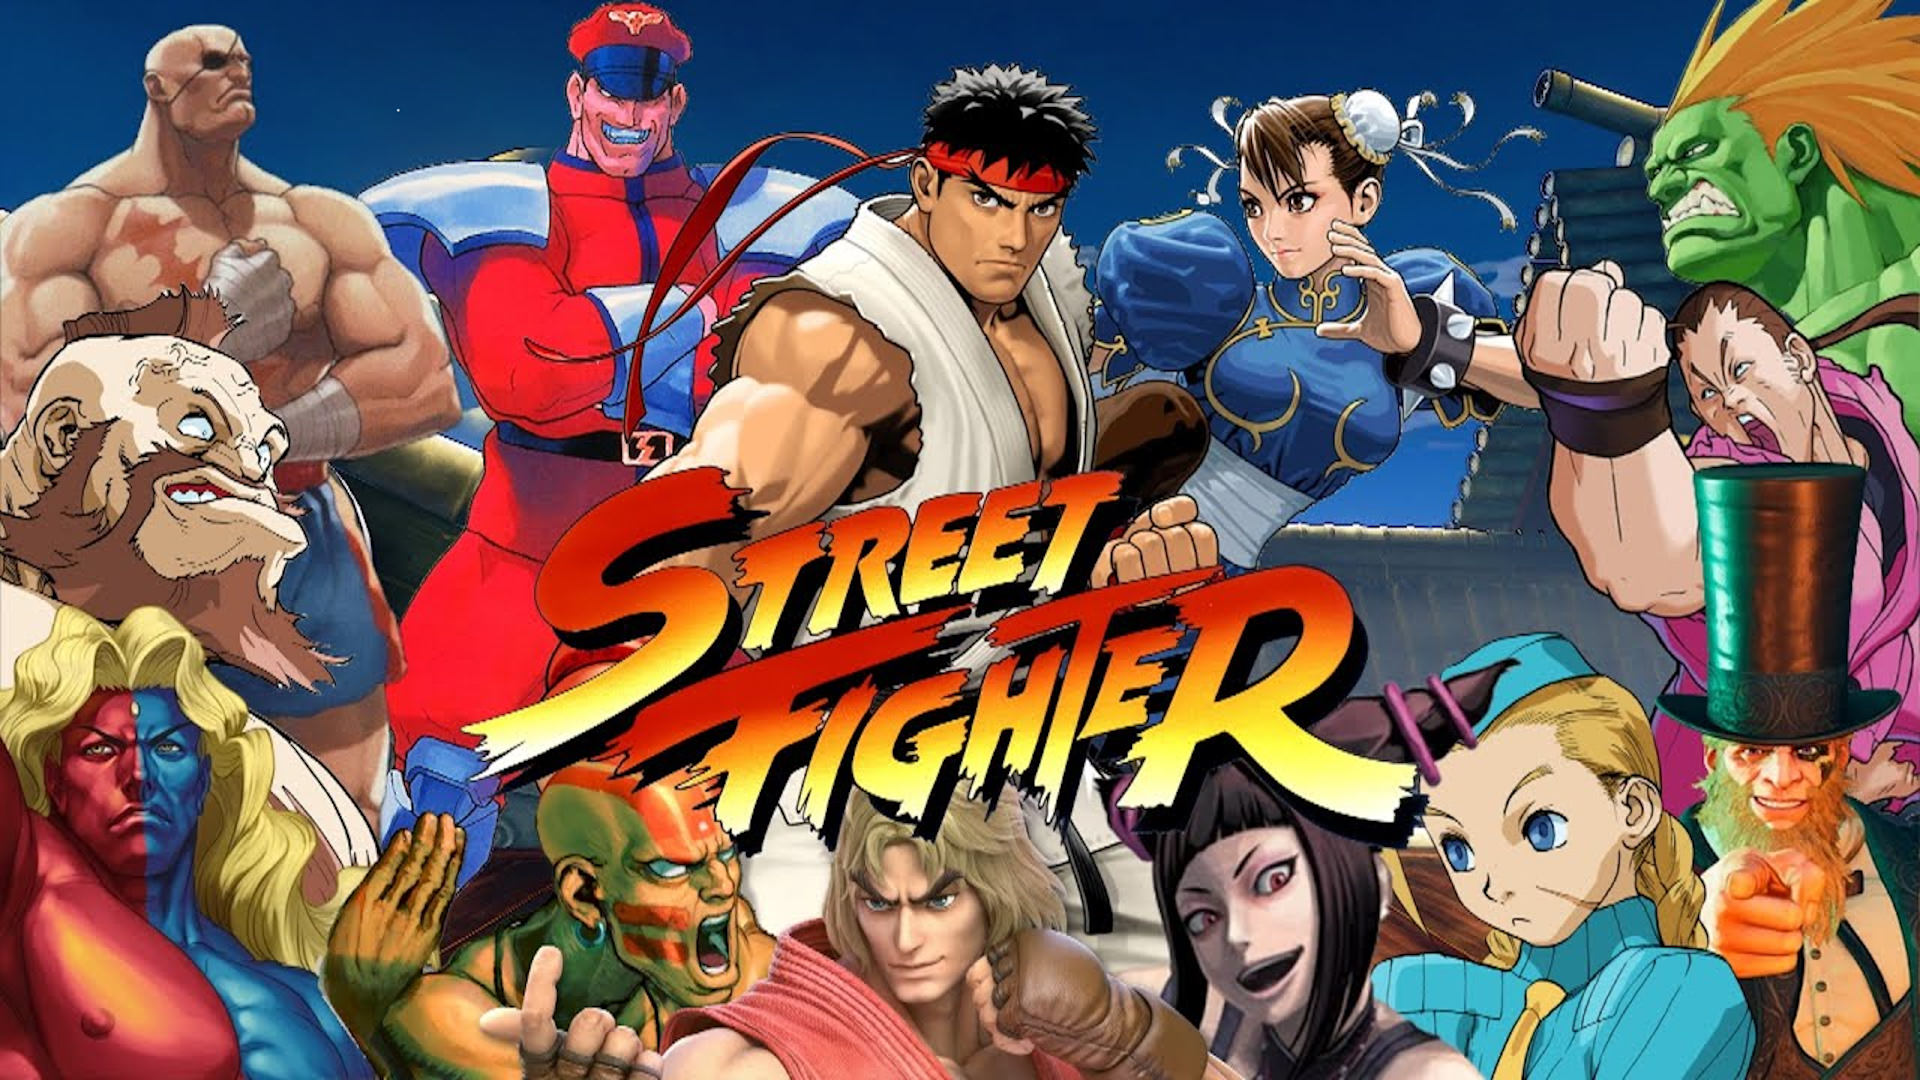 تاریخ اکران فیلم Street Fighter اعلام شد